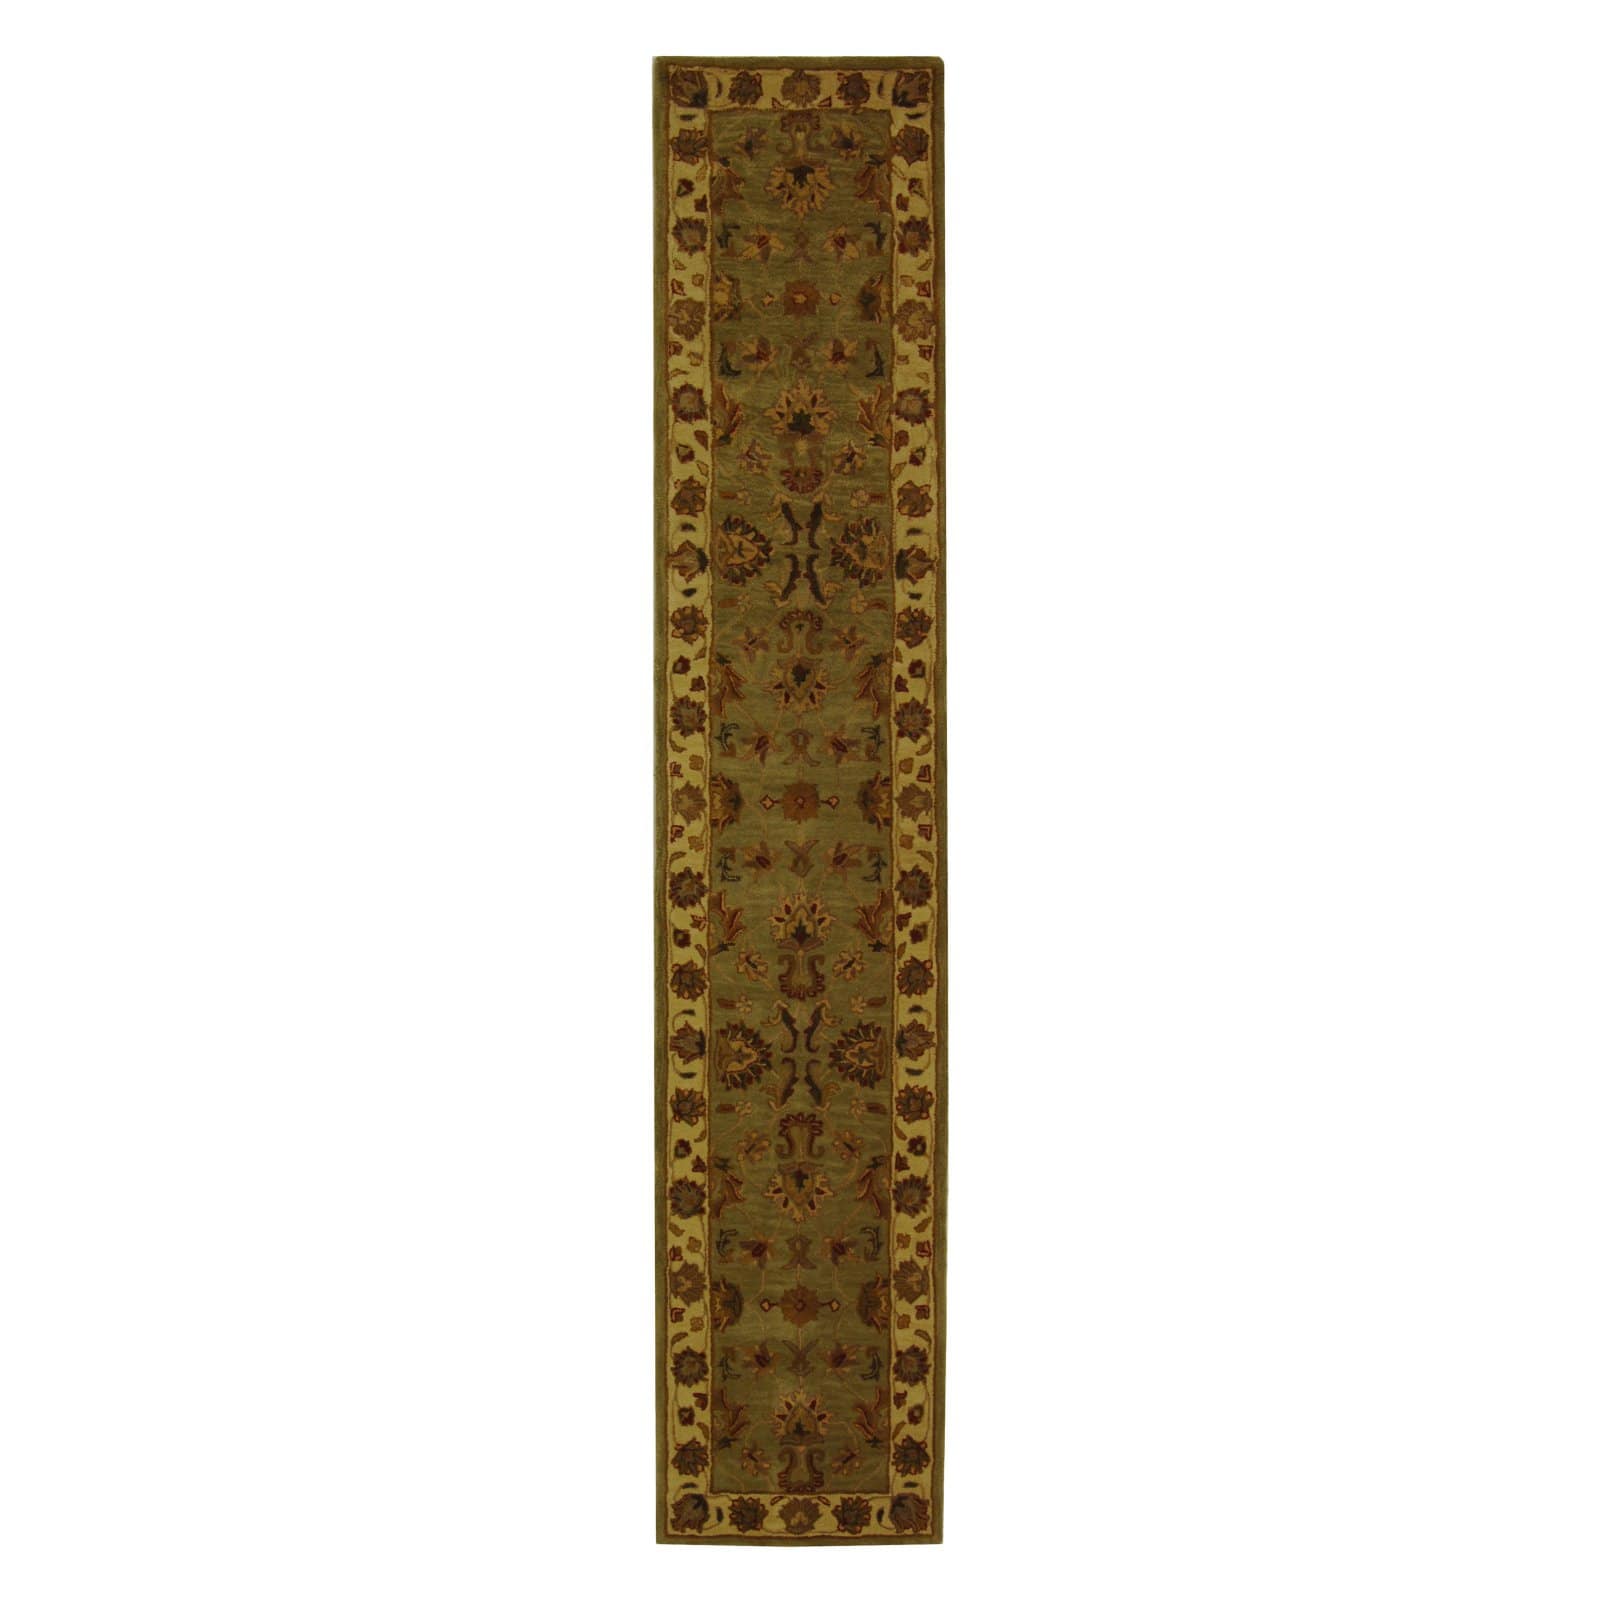 SAFAVIEH Heritage Regis Traditional Wool Area Rug, Green/Gold, 7'6" x 9'6" - image 3 of 10